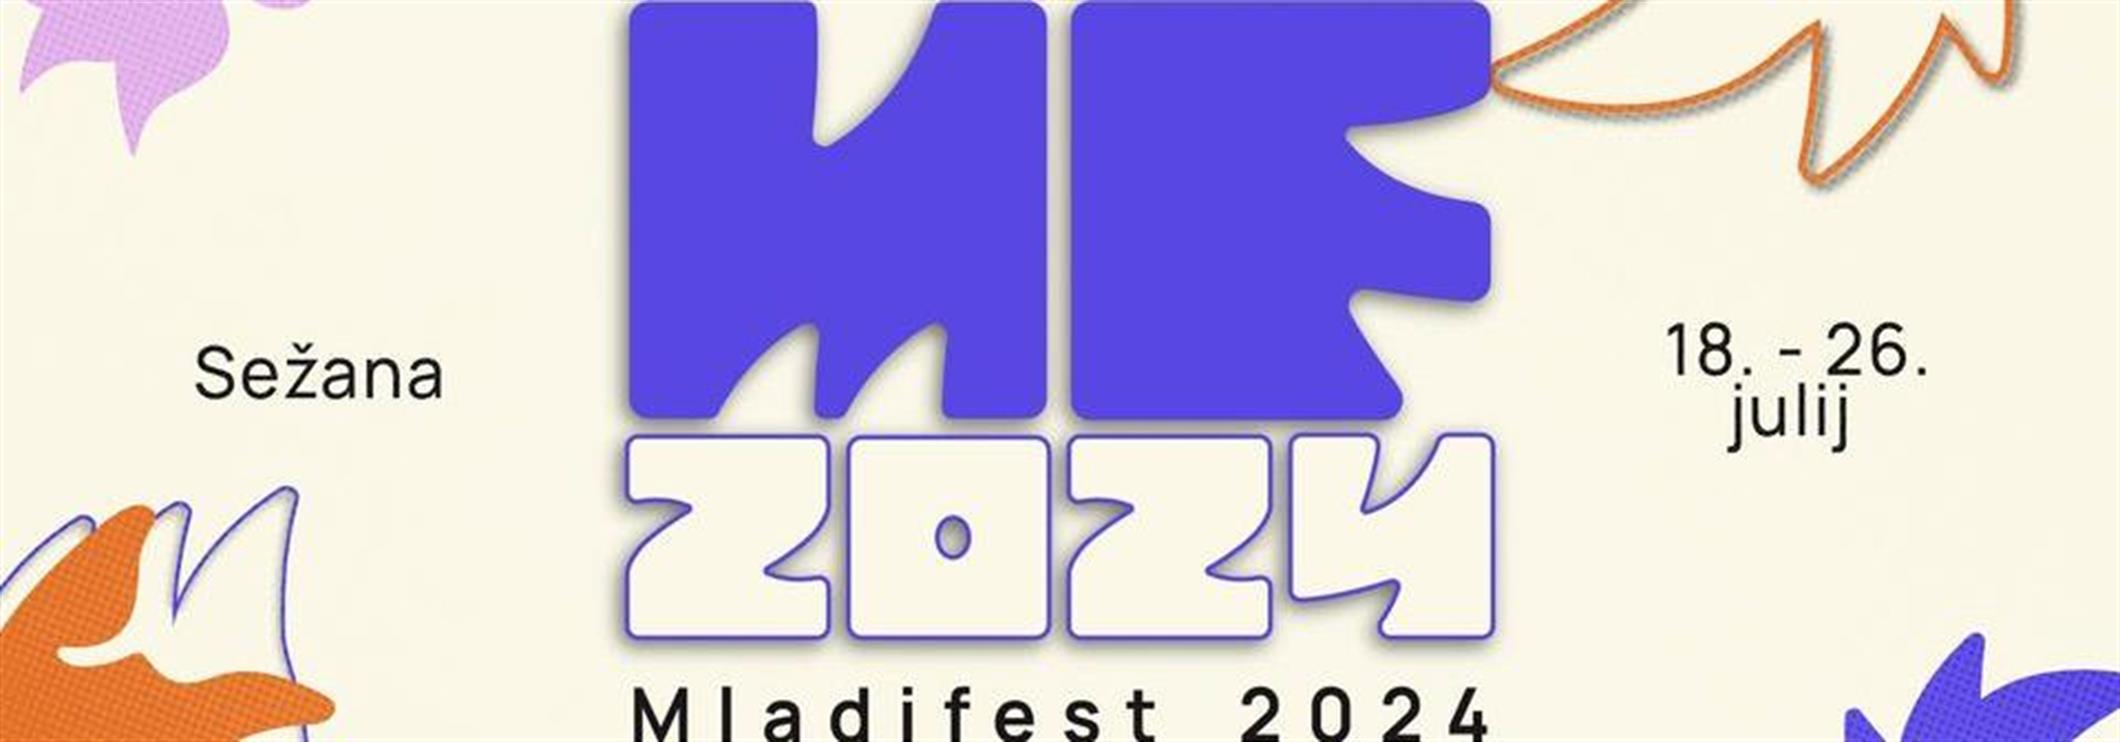 Mladifest 2024